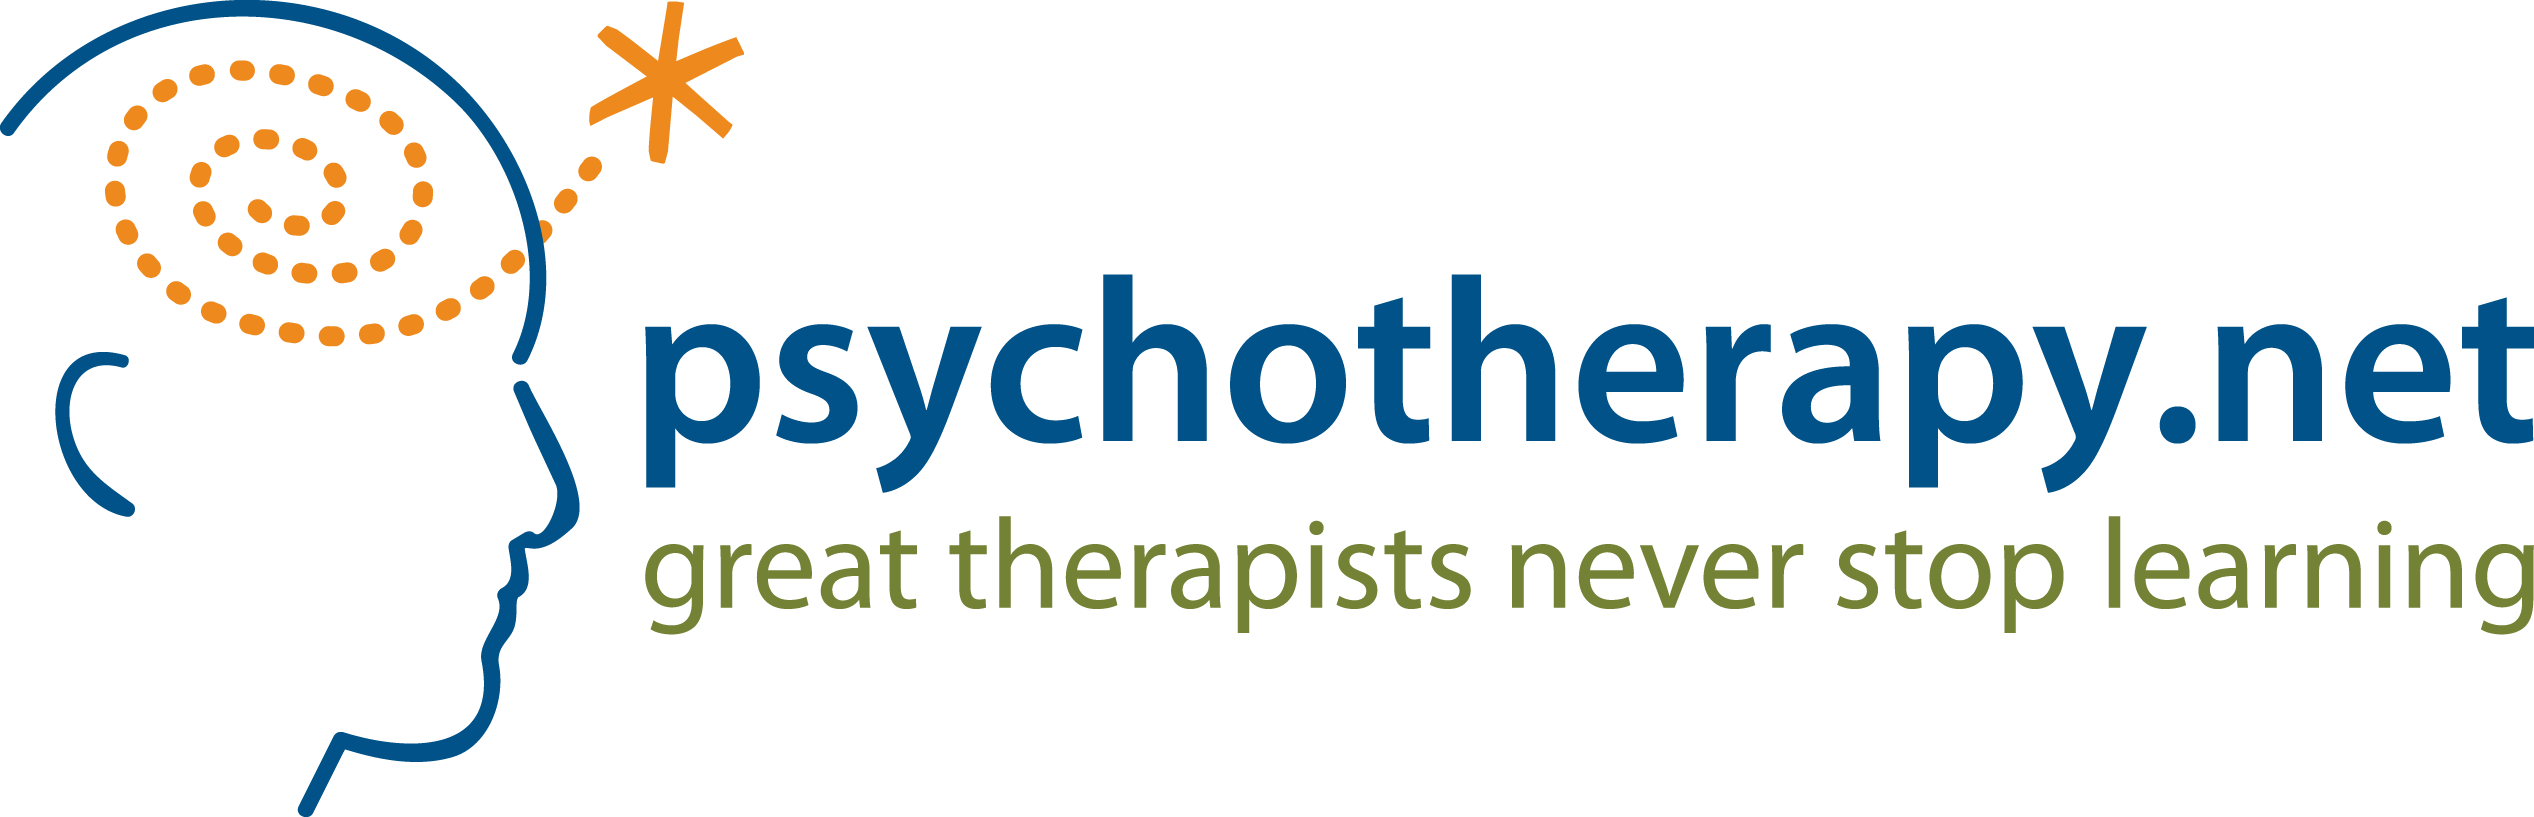 Psychotherapy Logo - Psychotherapy.net: Online Psychotherapy Magazine